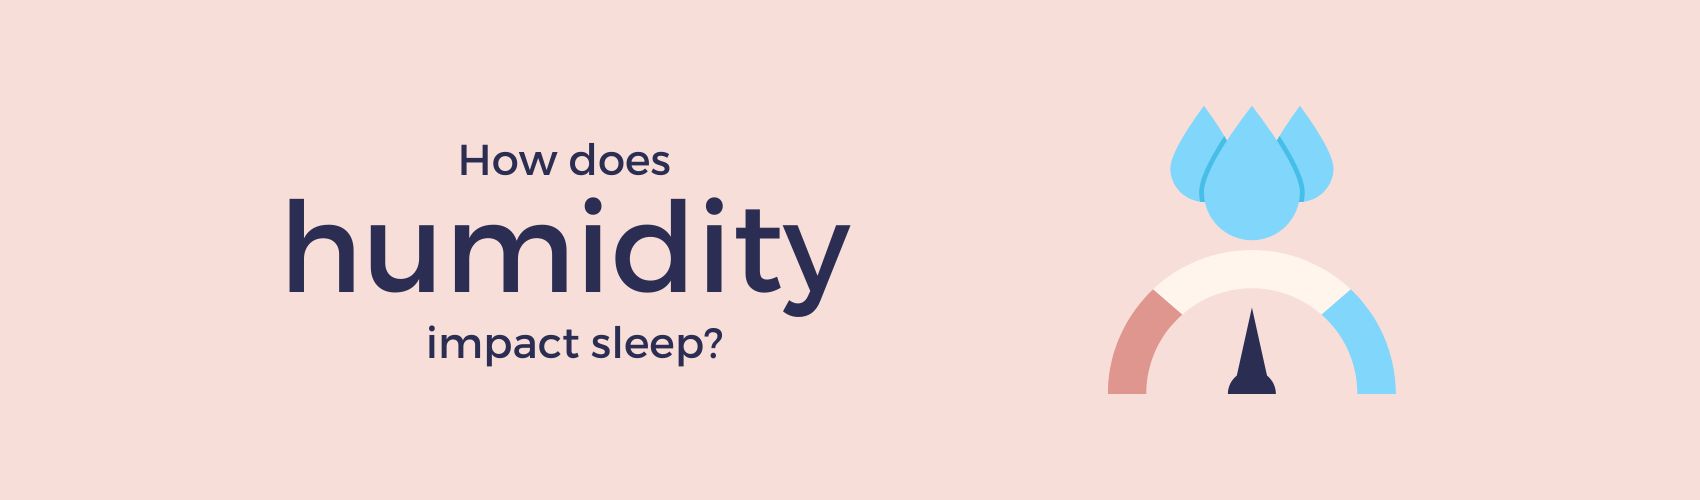 Humidity impact sleep